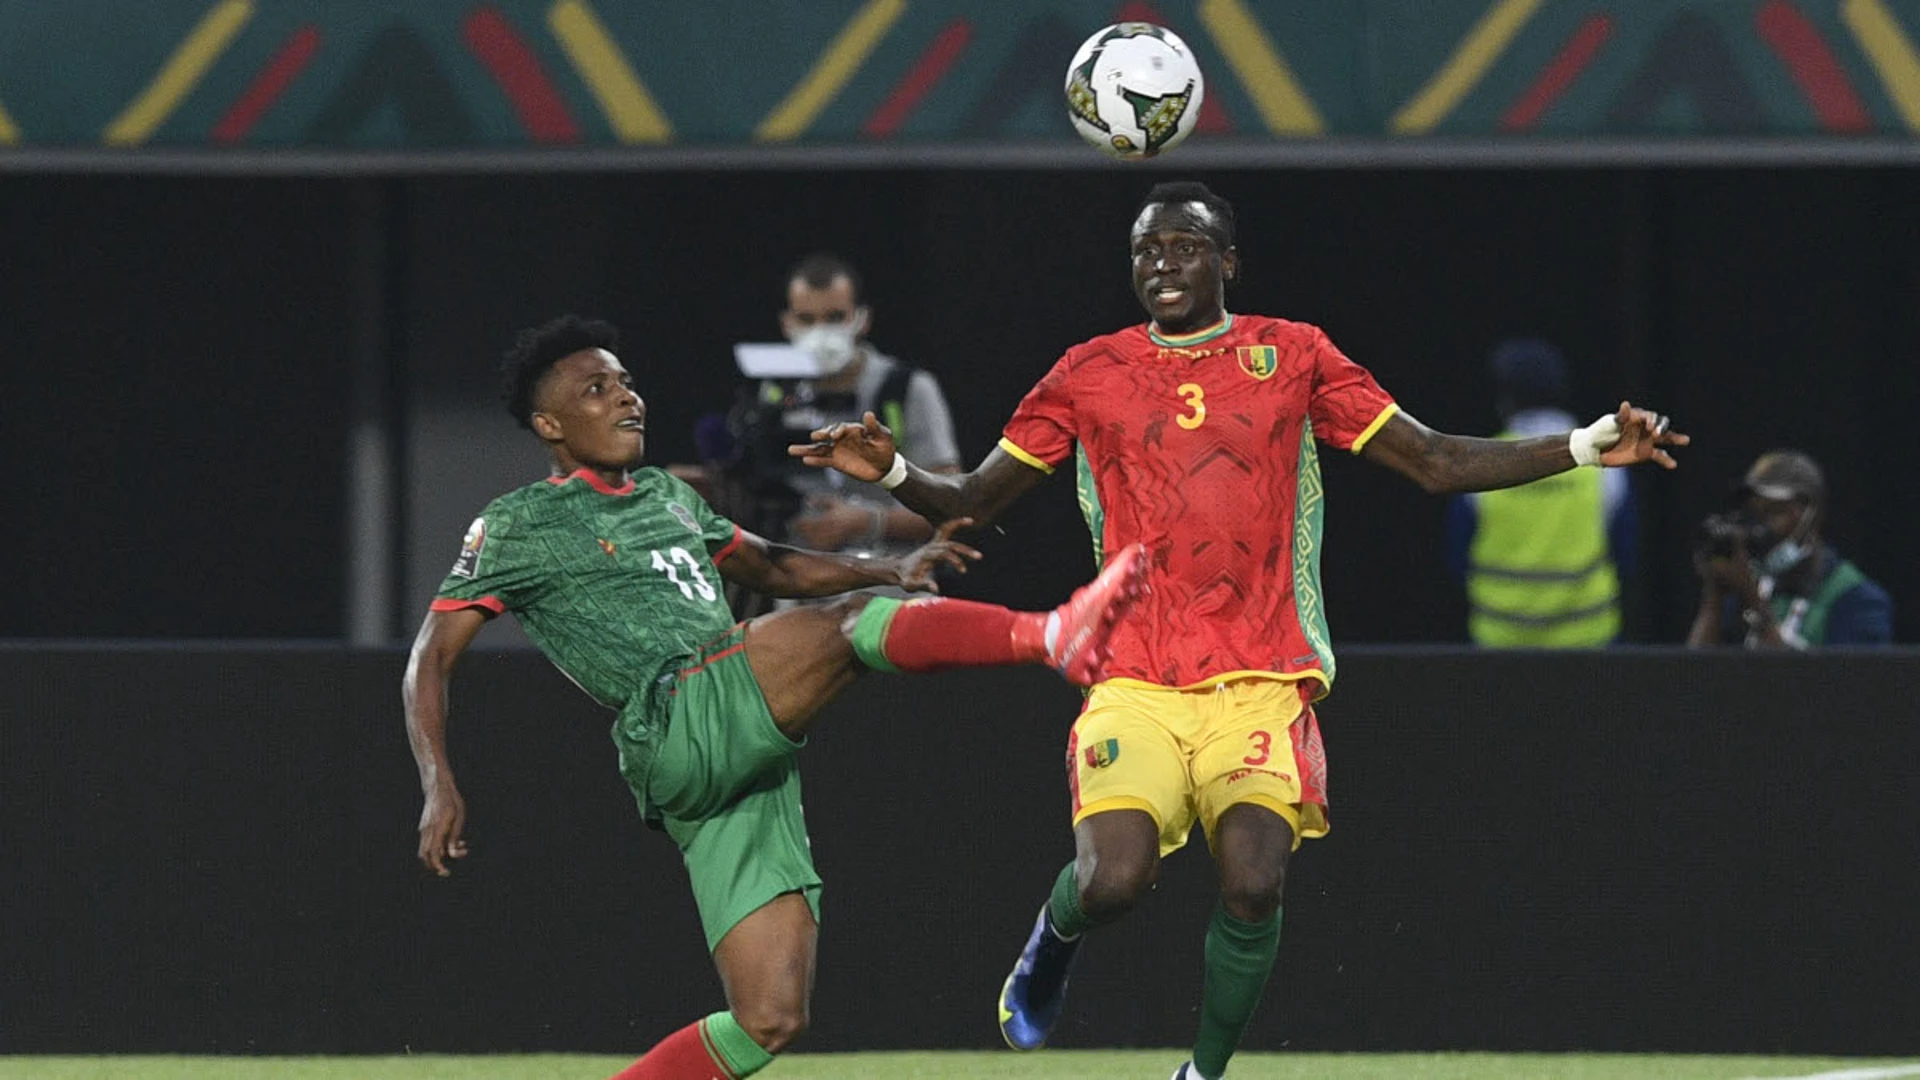 Malawi and Guinea entertain fans in Lilongwe